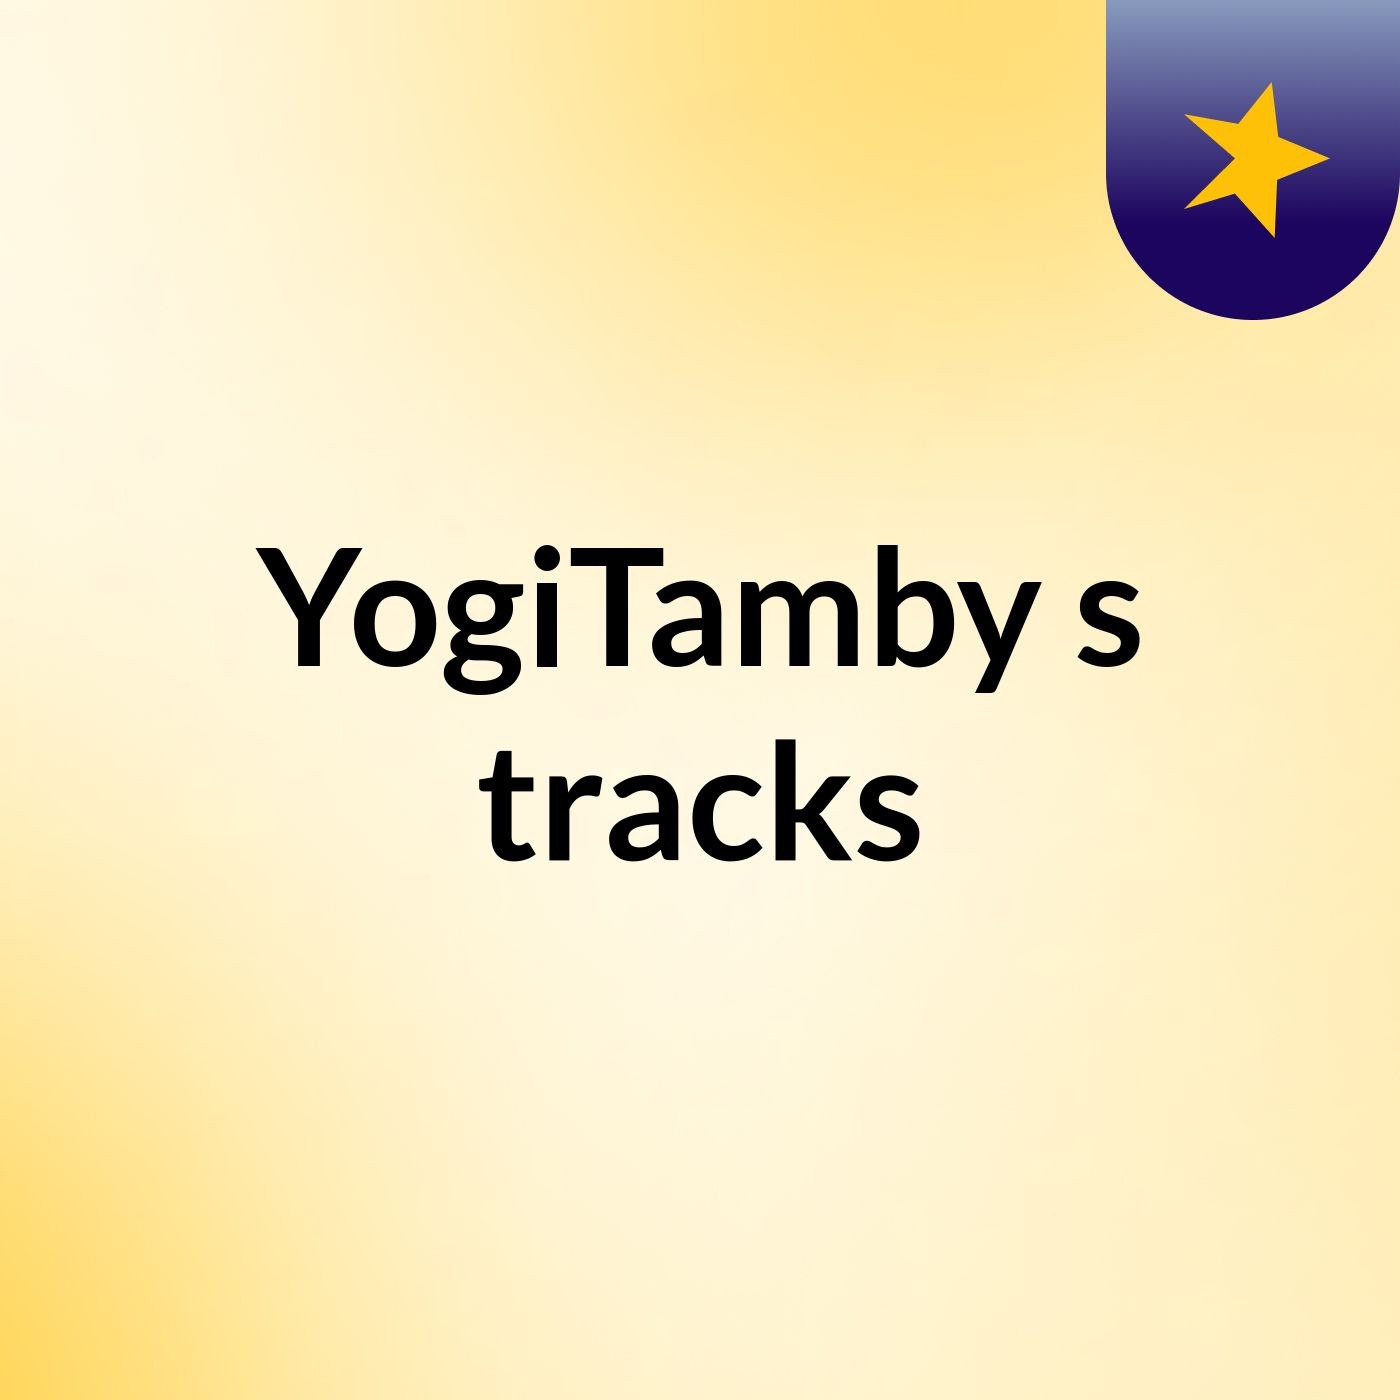 YogiTamby's tracks